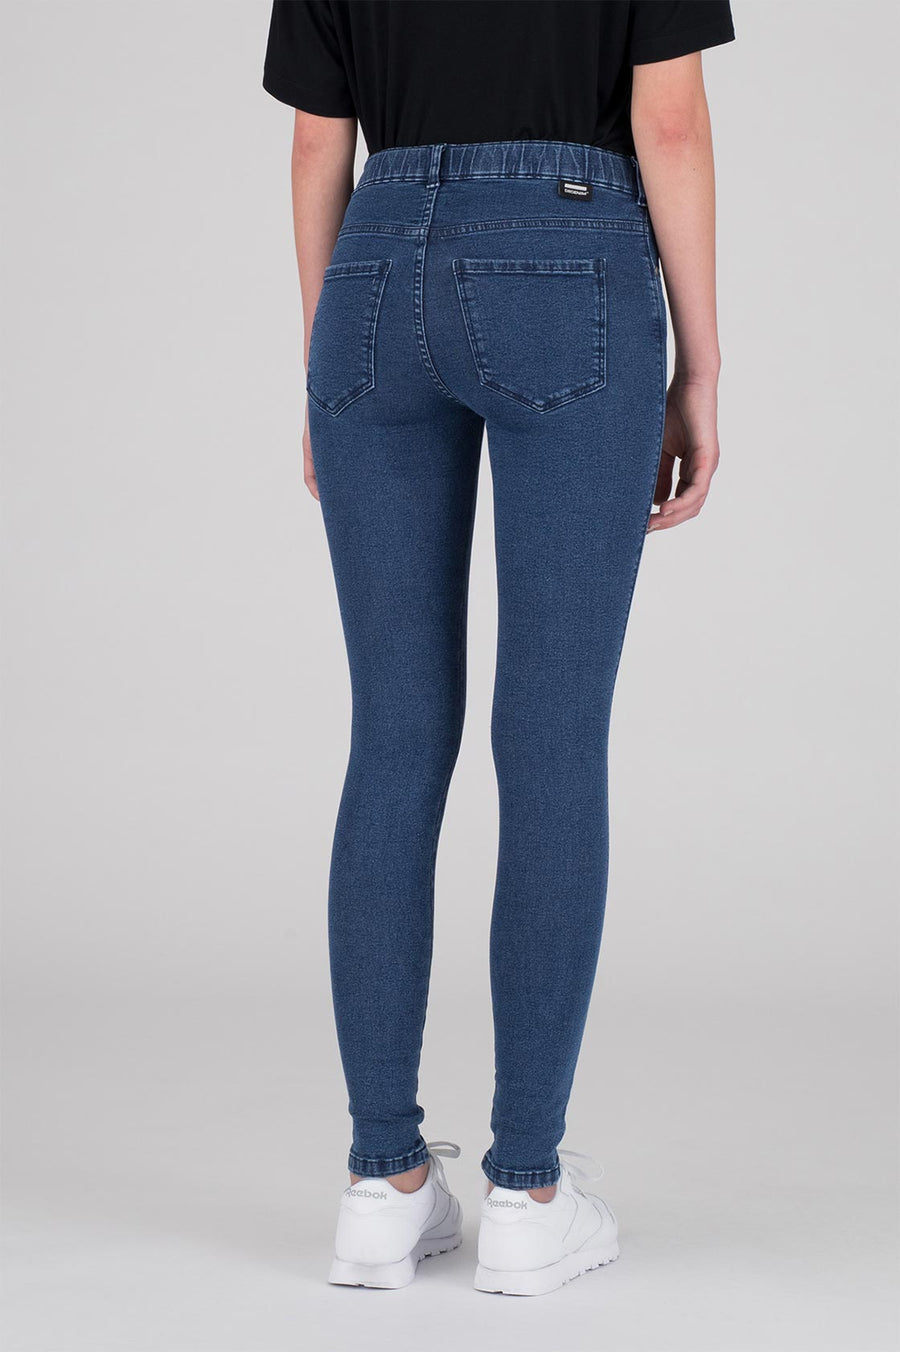 Lexy Skinny Jeans - Pure Dark Blue - Final Sale – Denim Jeans - Australia